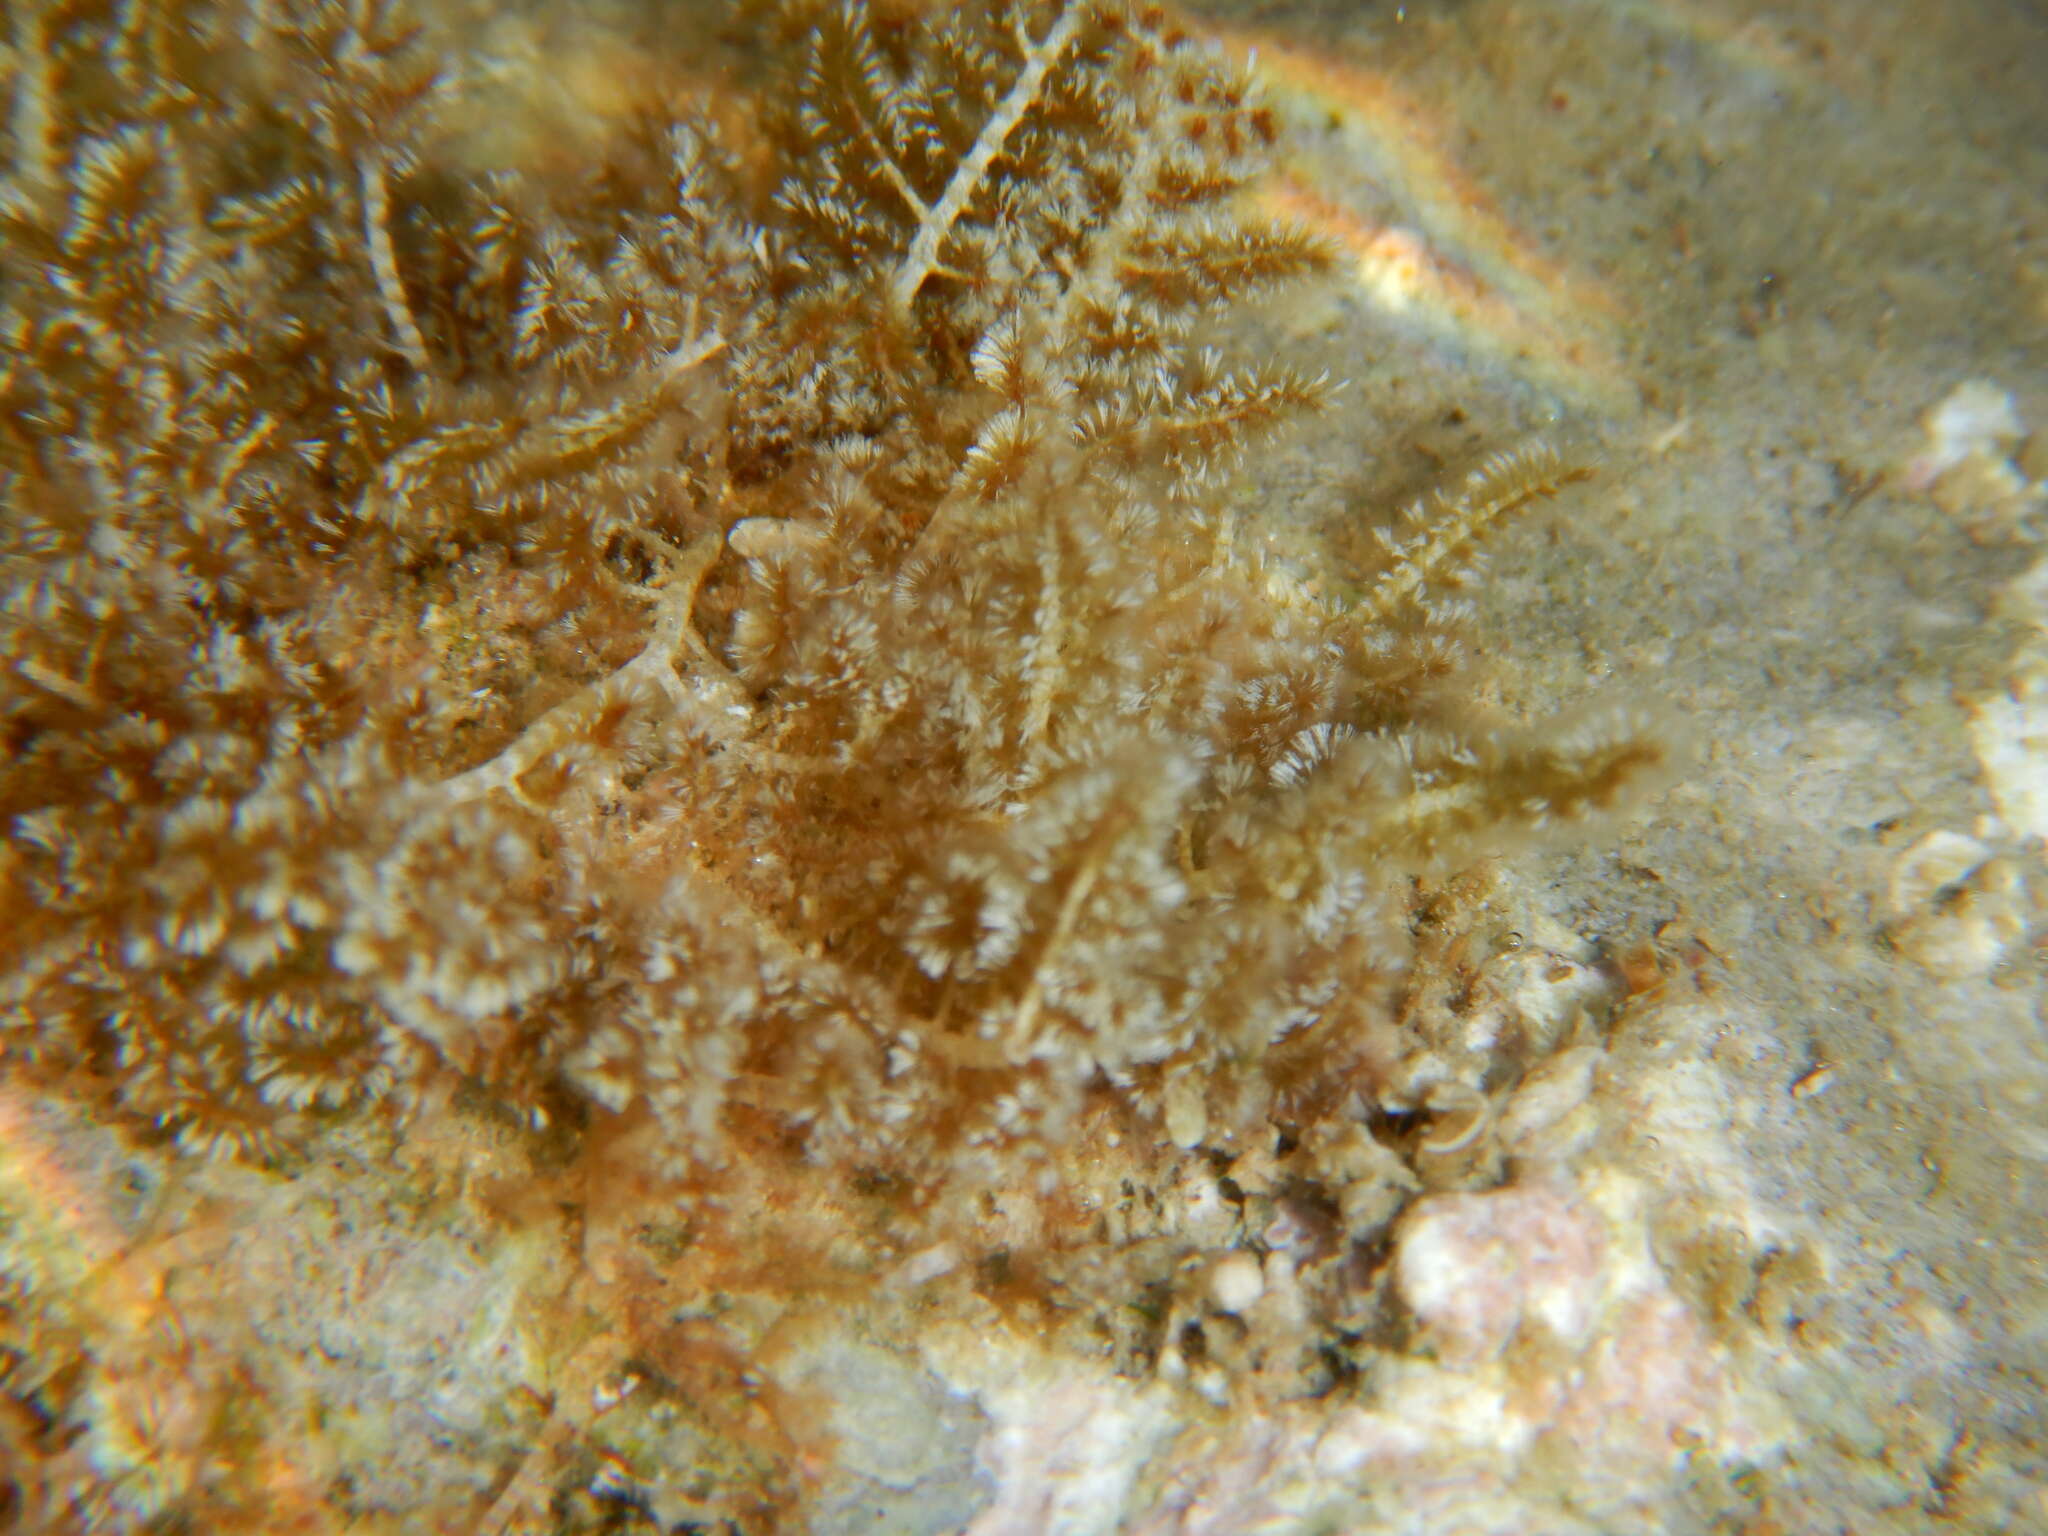 Image of Wrangelia penicillata